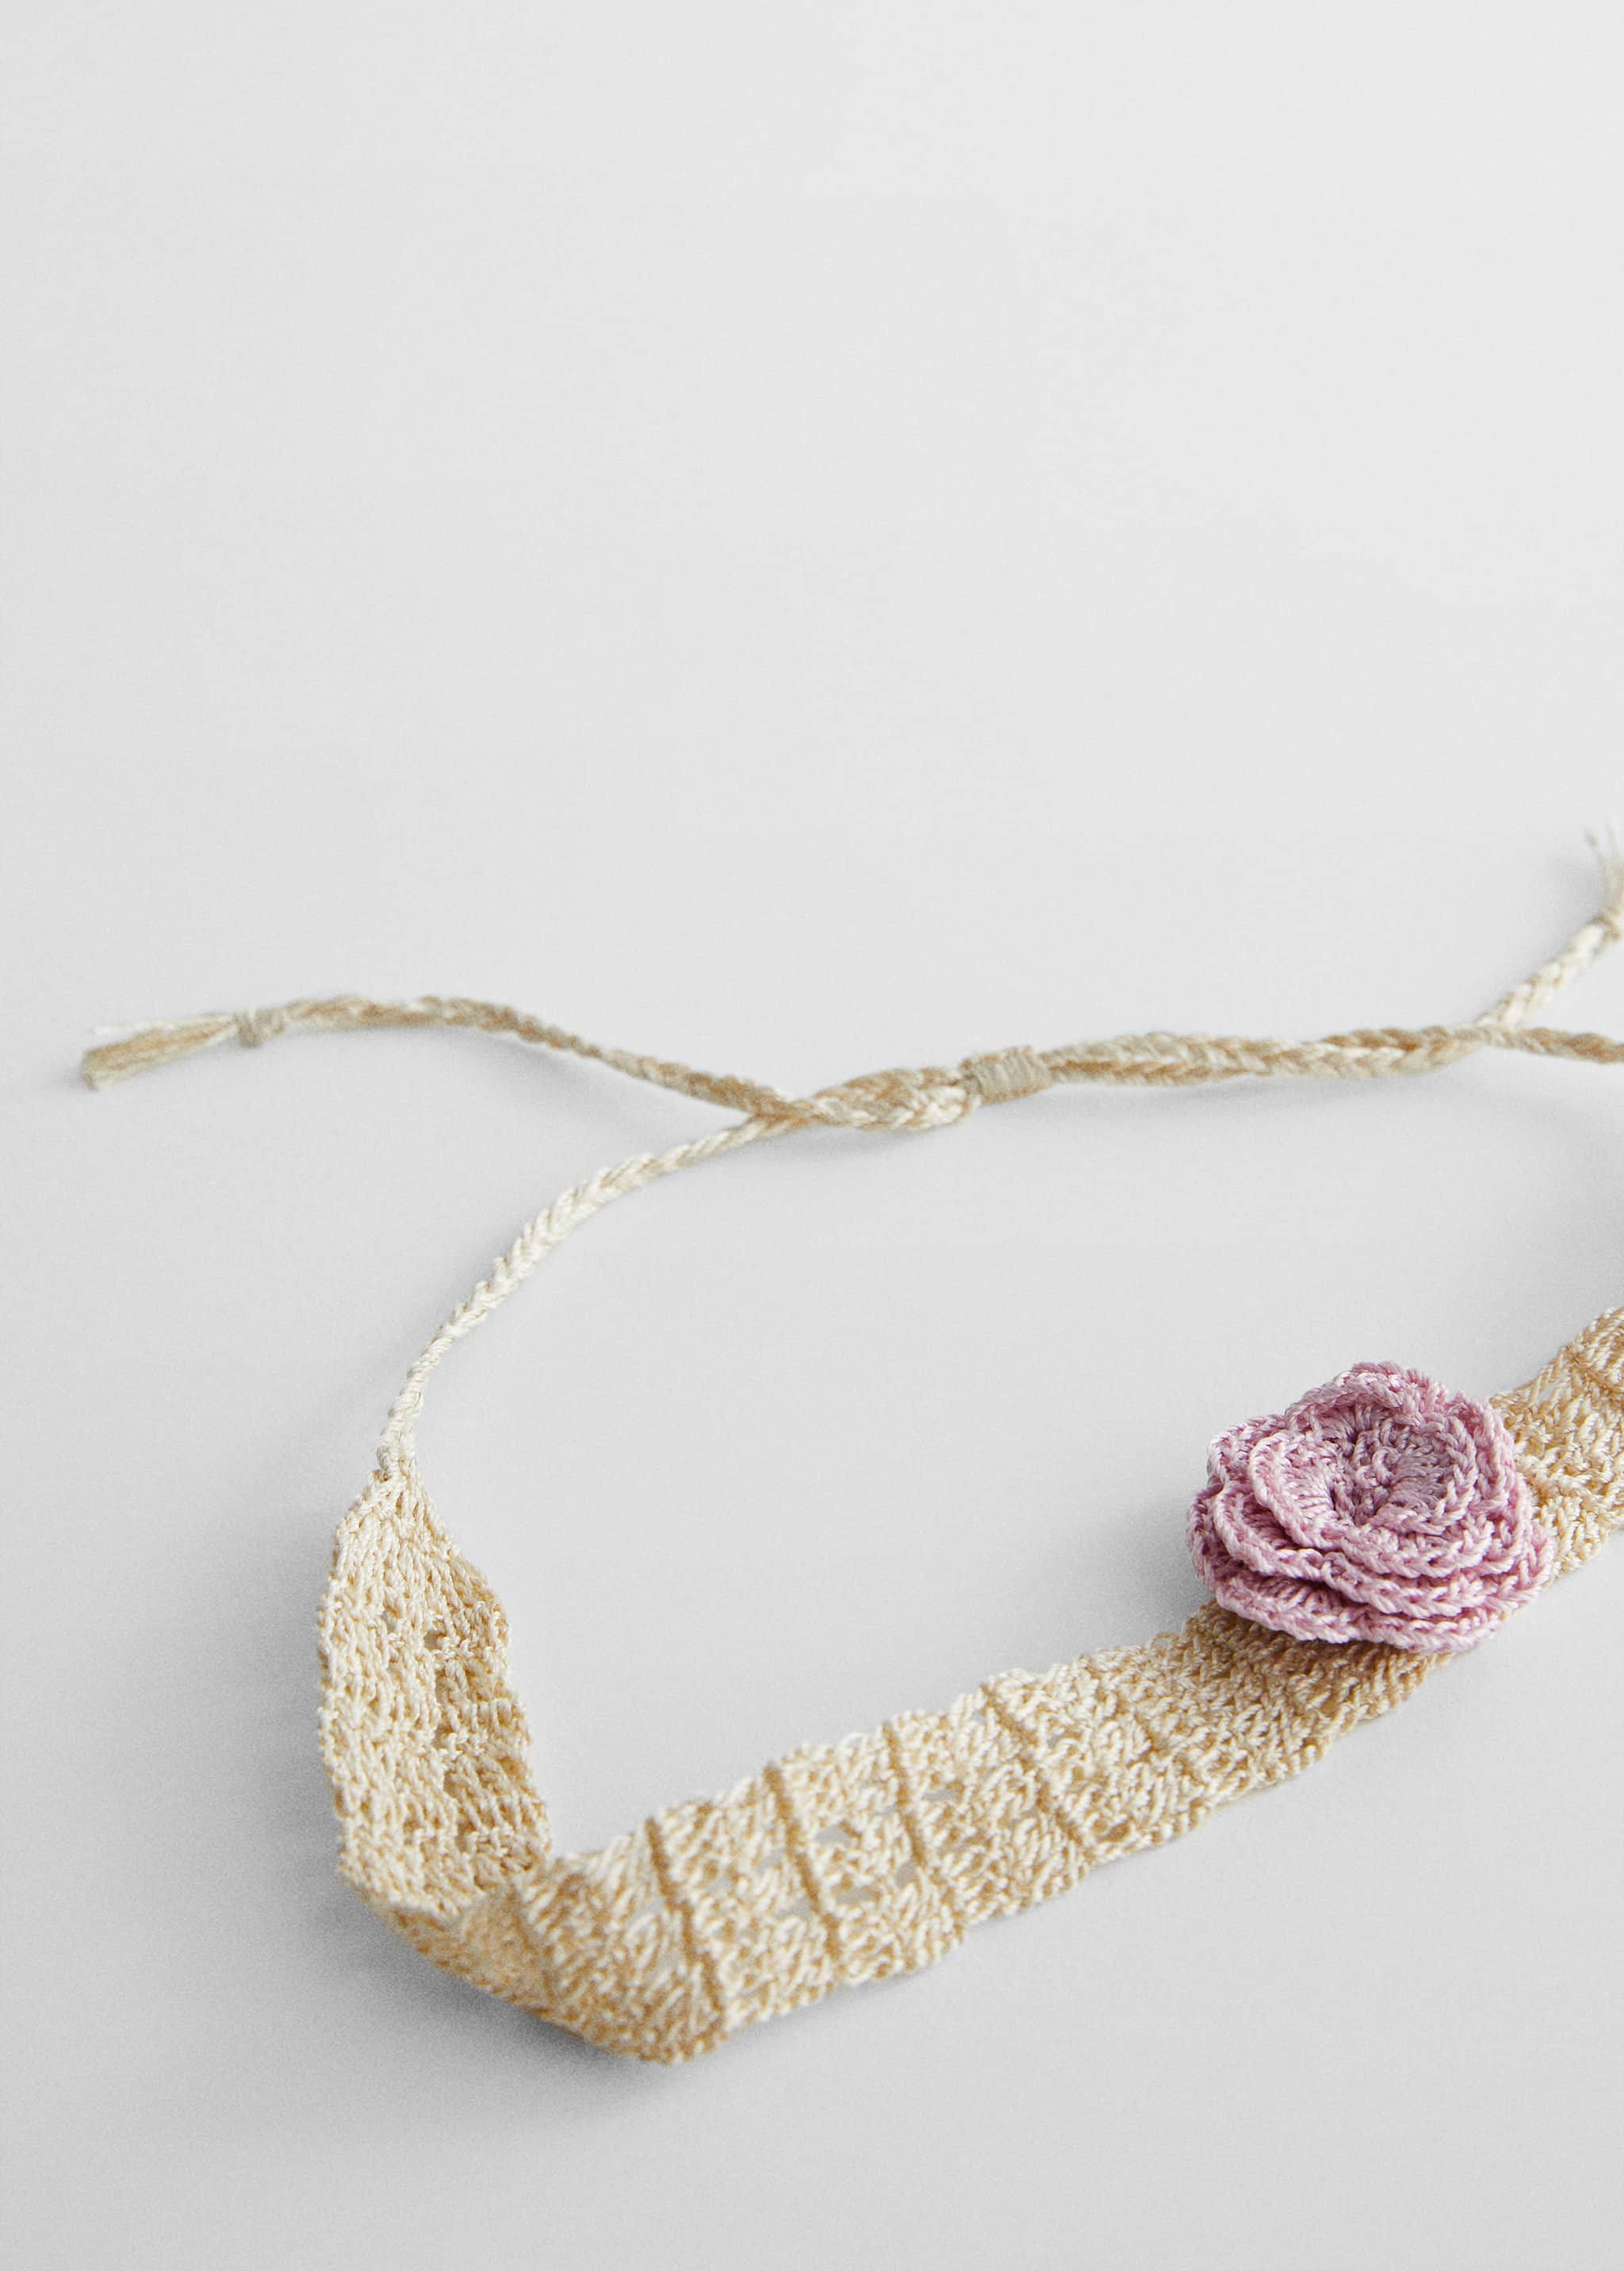 Crochet flower necklace - Medium plane